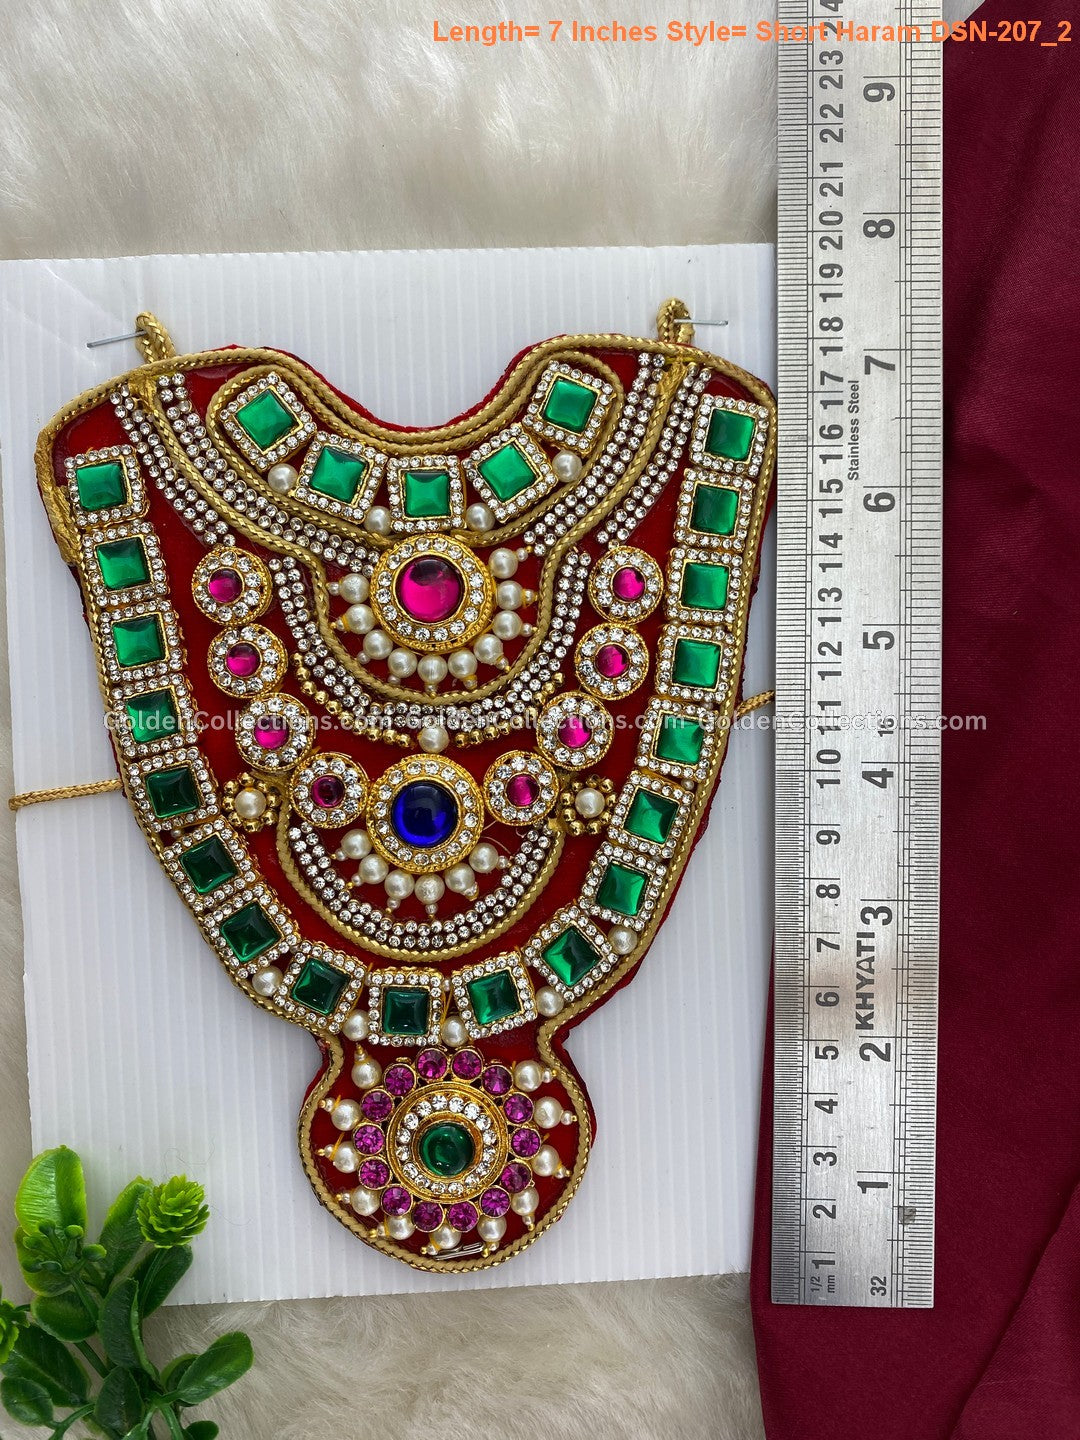 Ammavaru Short Necklace - Divine Elegance Collection - DSN-207 2